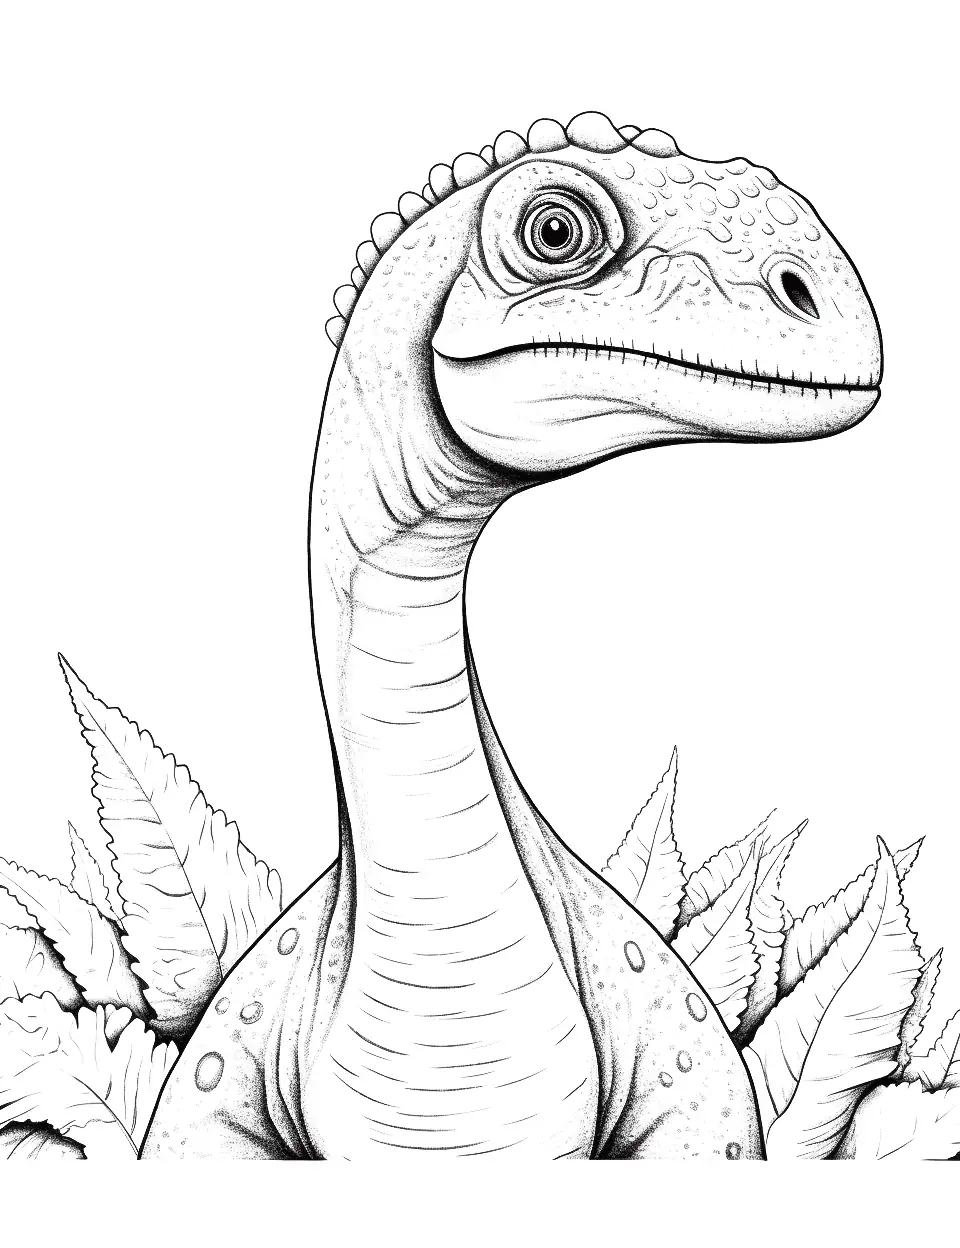 Realistic Velociraptor Dinosaur Coloring Page - A realistic, detailed Velociraptor in its natural environment.